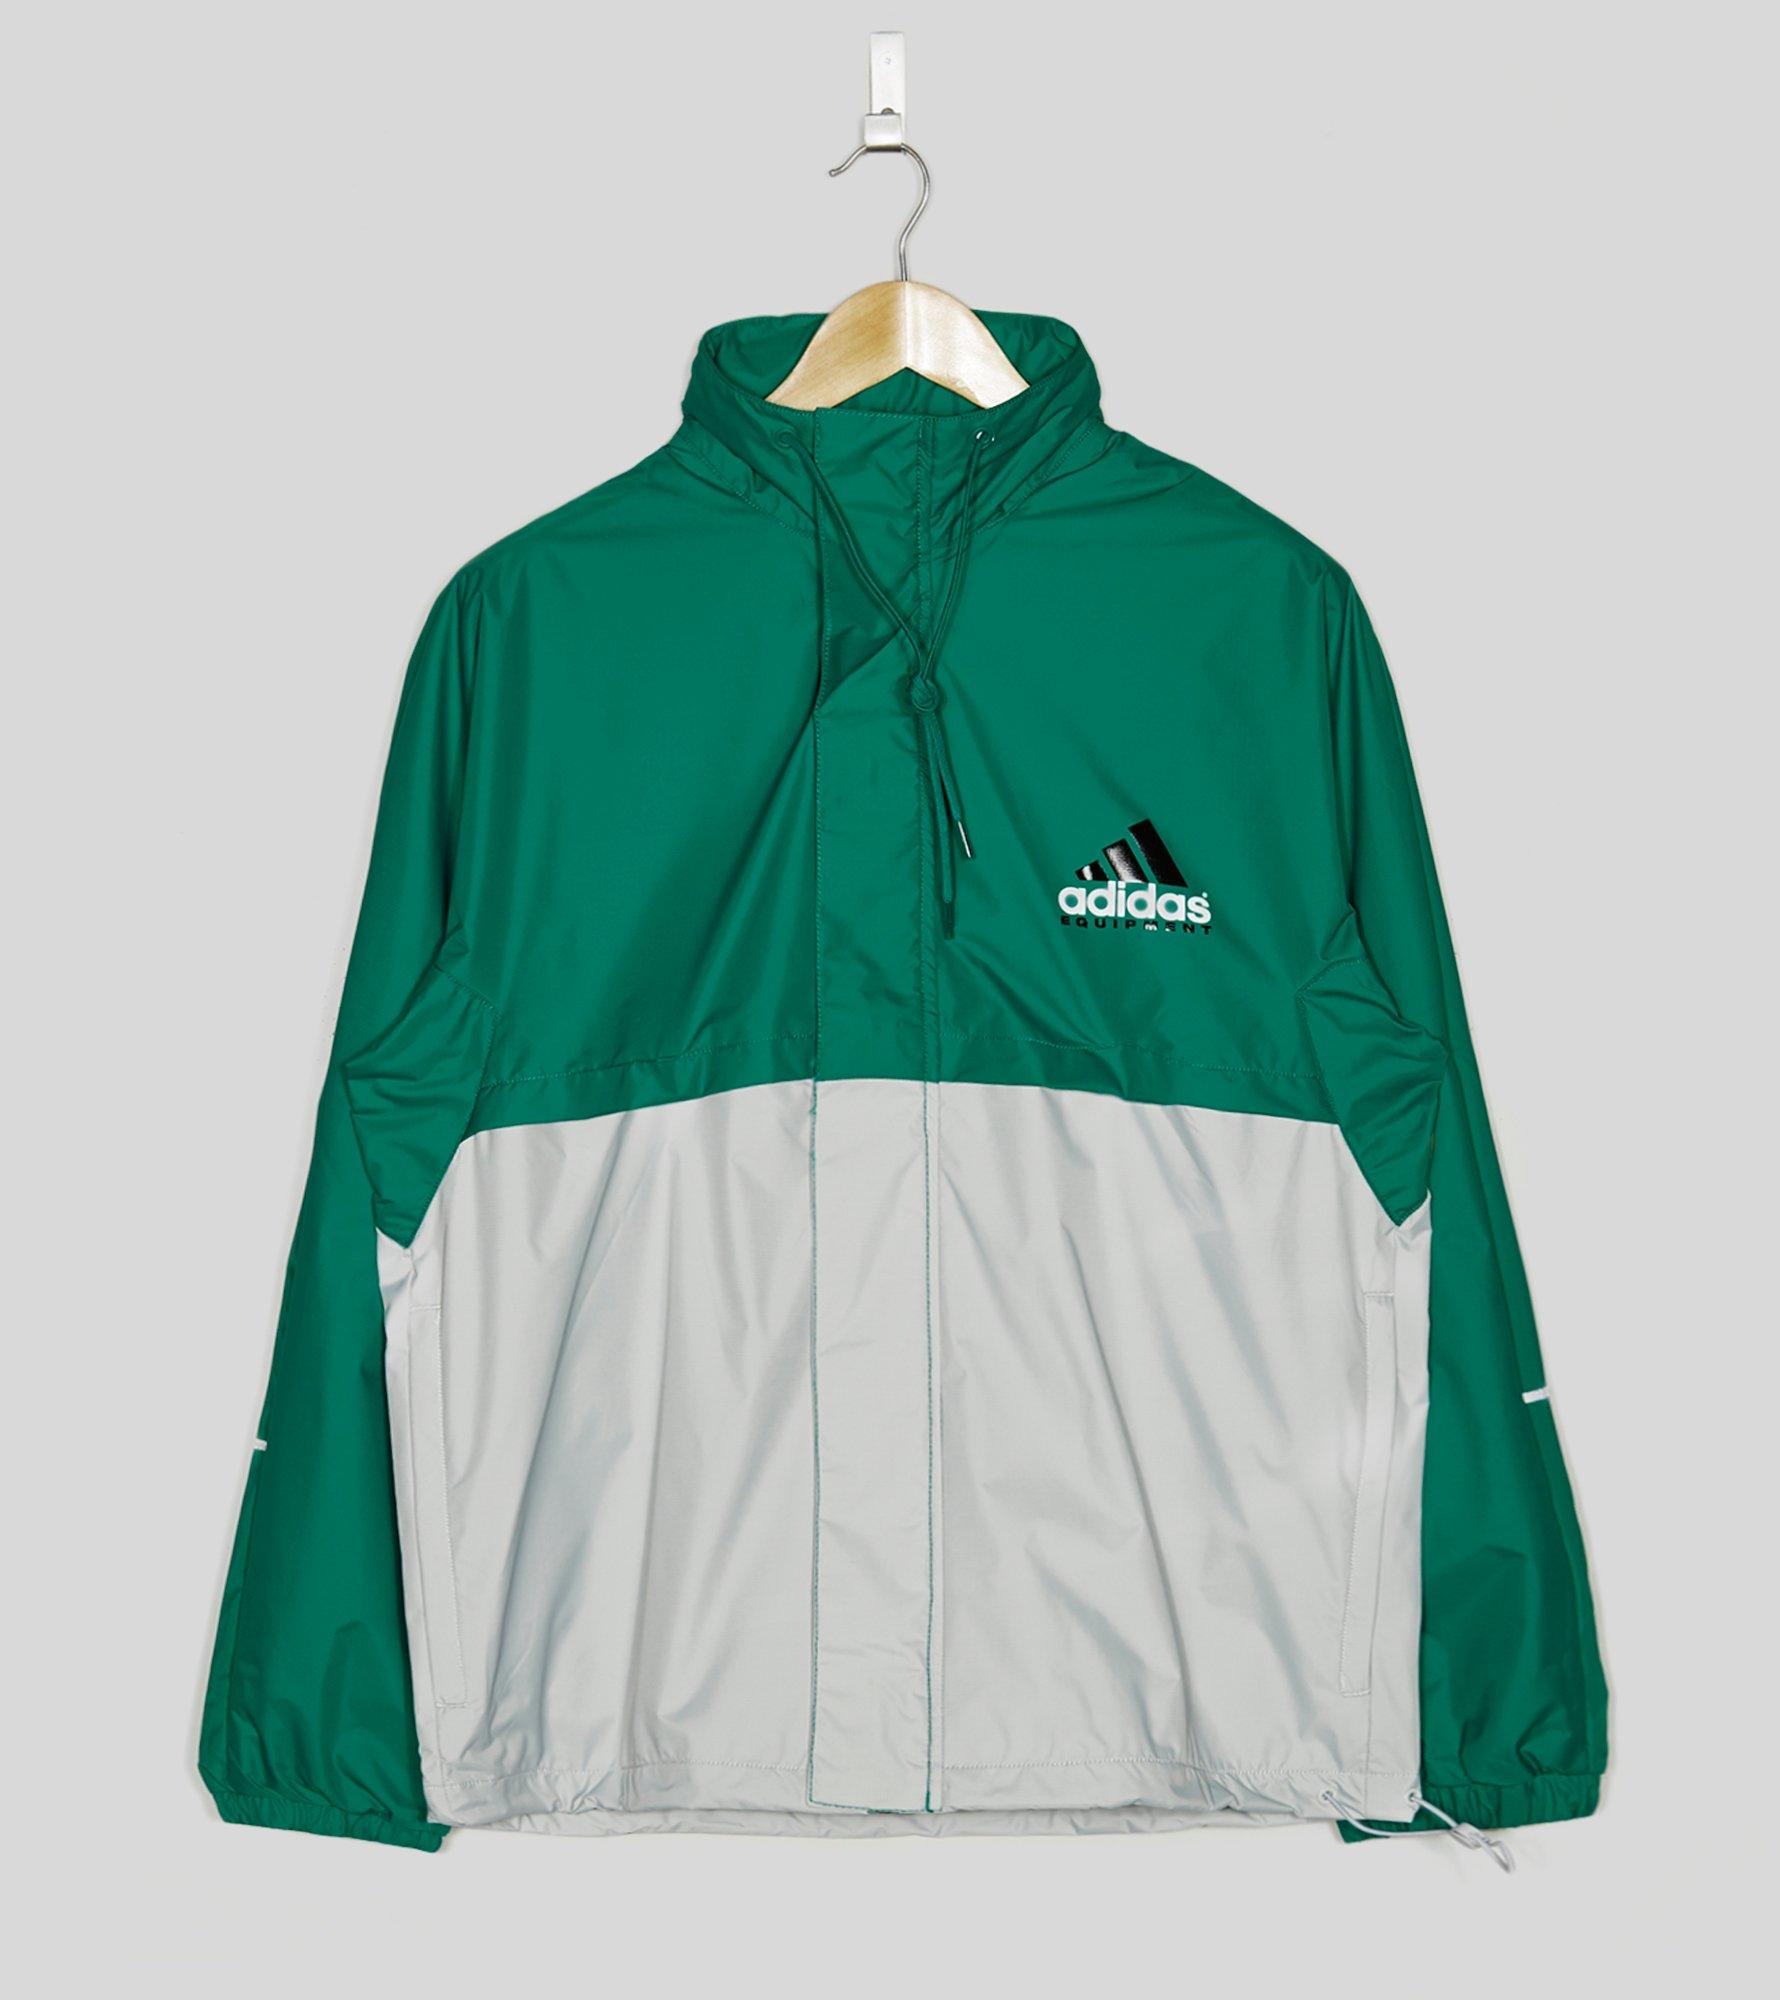 adidas equipment jacket green